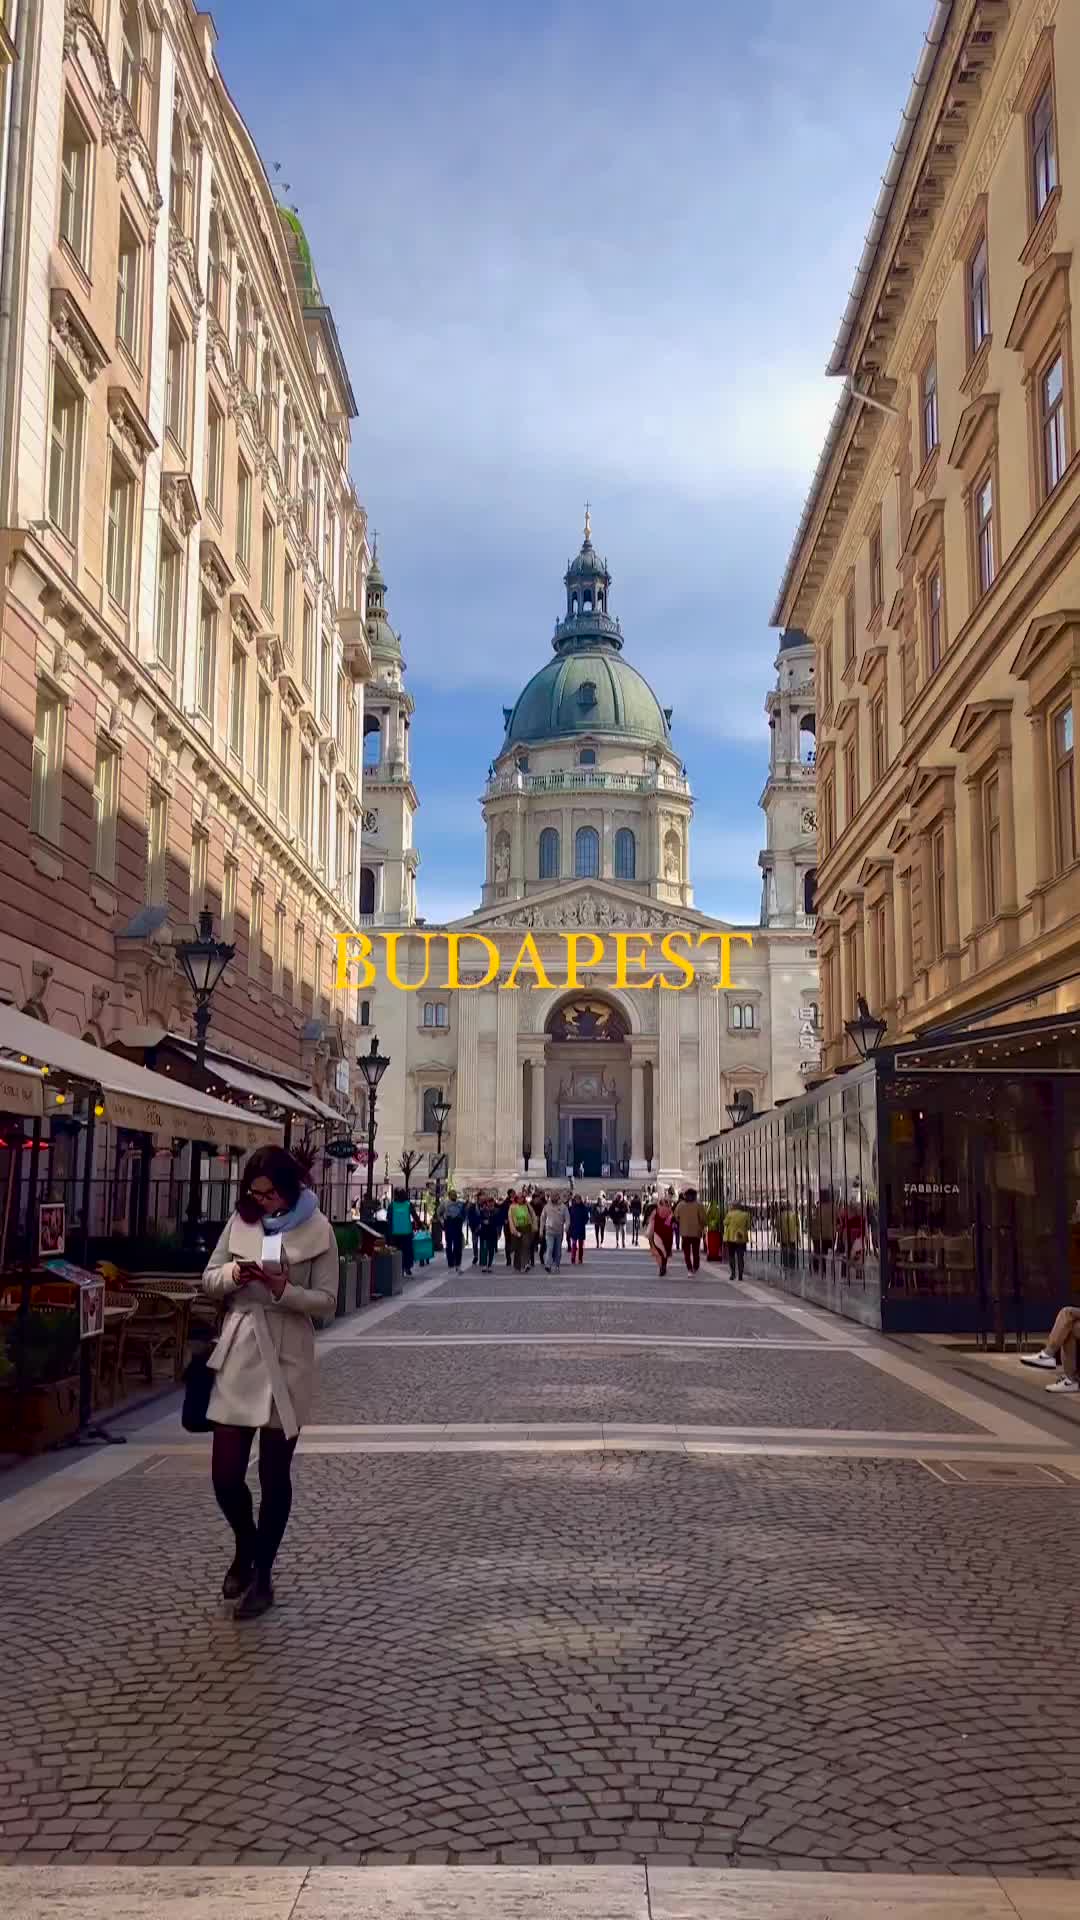 Budapest: Bridges, Thermal Baths & Endless Charm